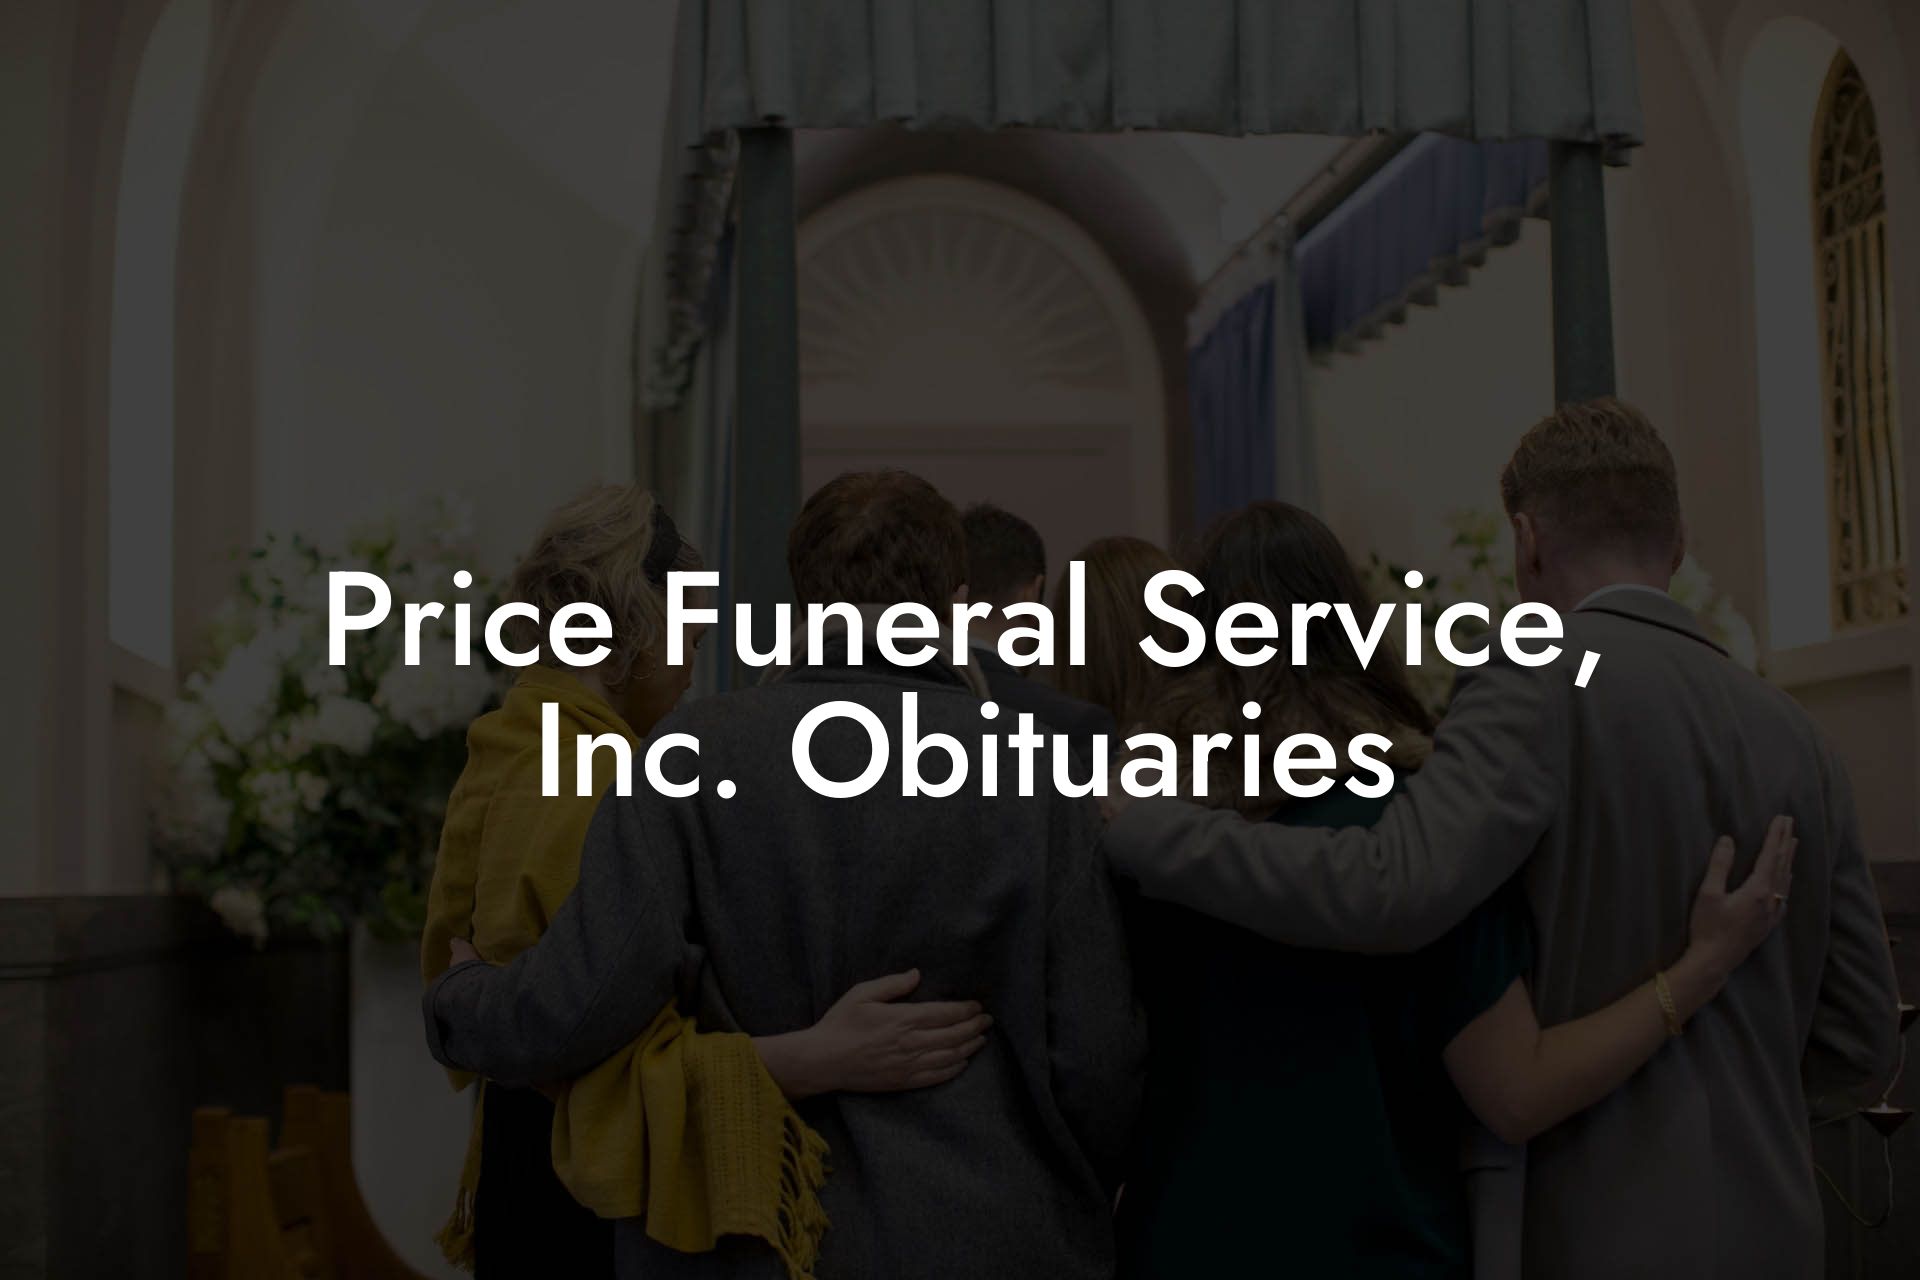 Price Funeral Service, Inc. Obituaries